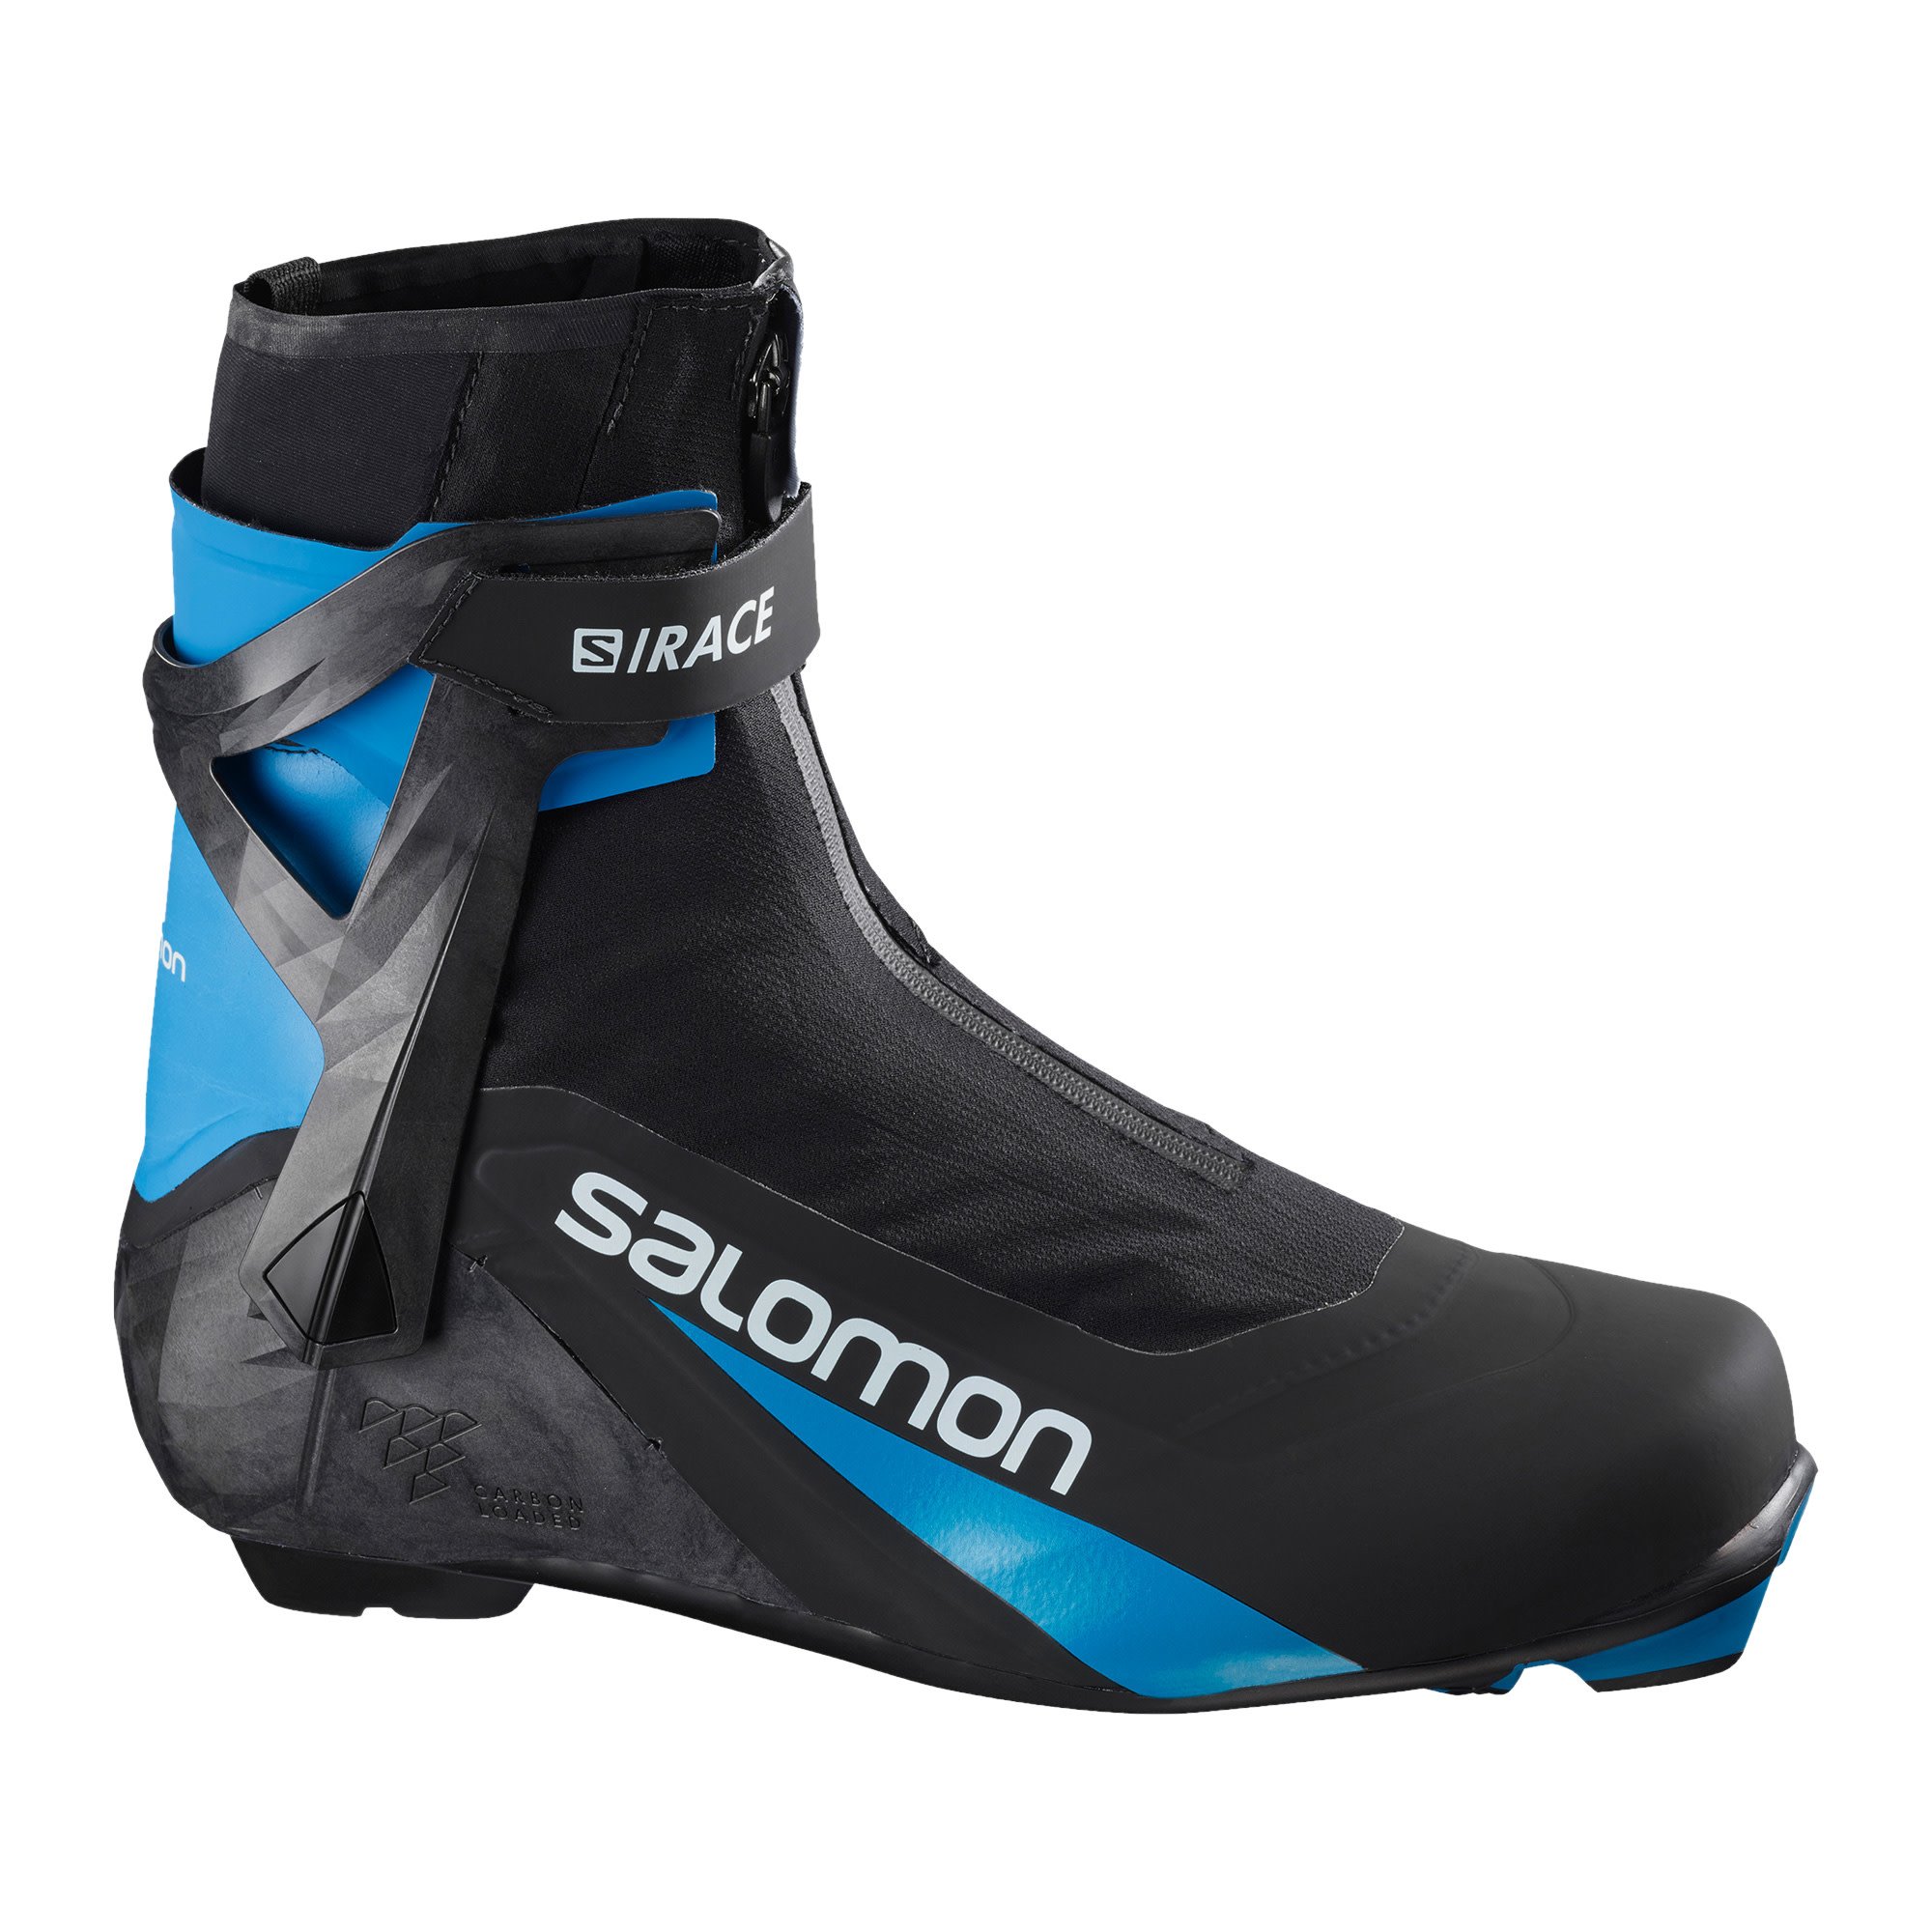 Salomon S/Race Carbon Skate Prolink Boot - Finn Sisu